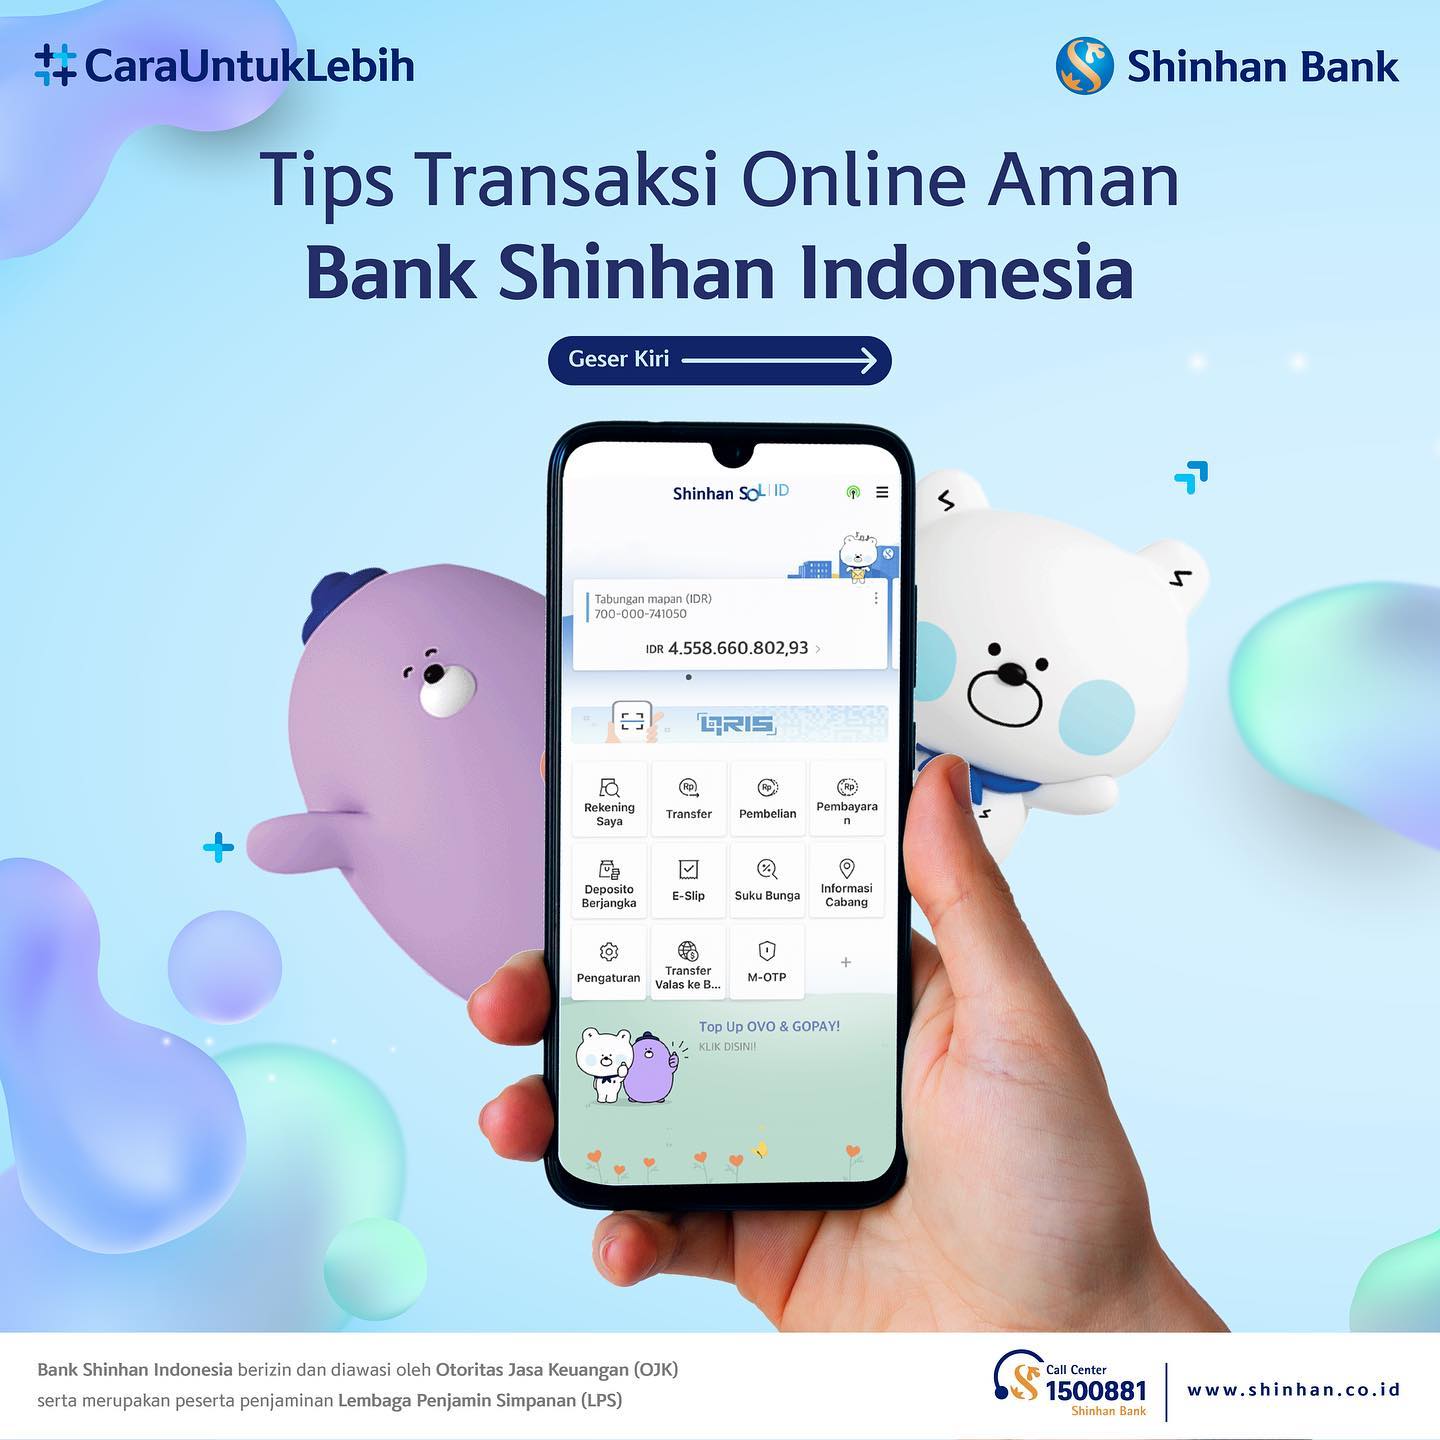 Gampang! Beginilah Cara Mendaftar Mobile Banking Shinbank Indonesia